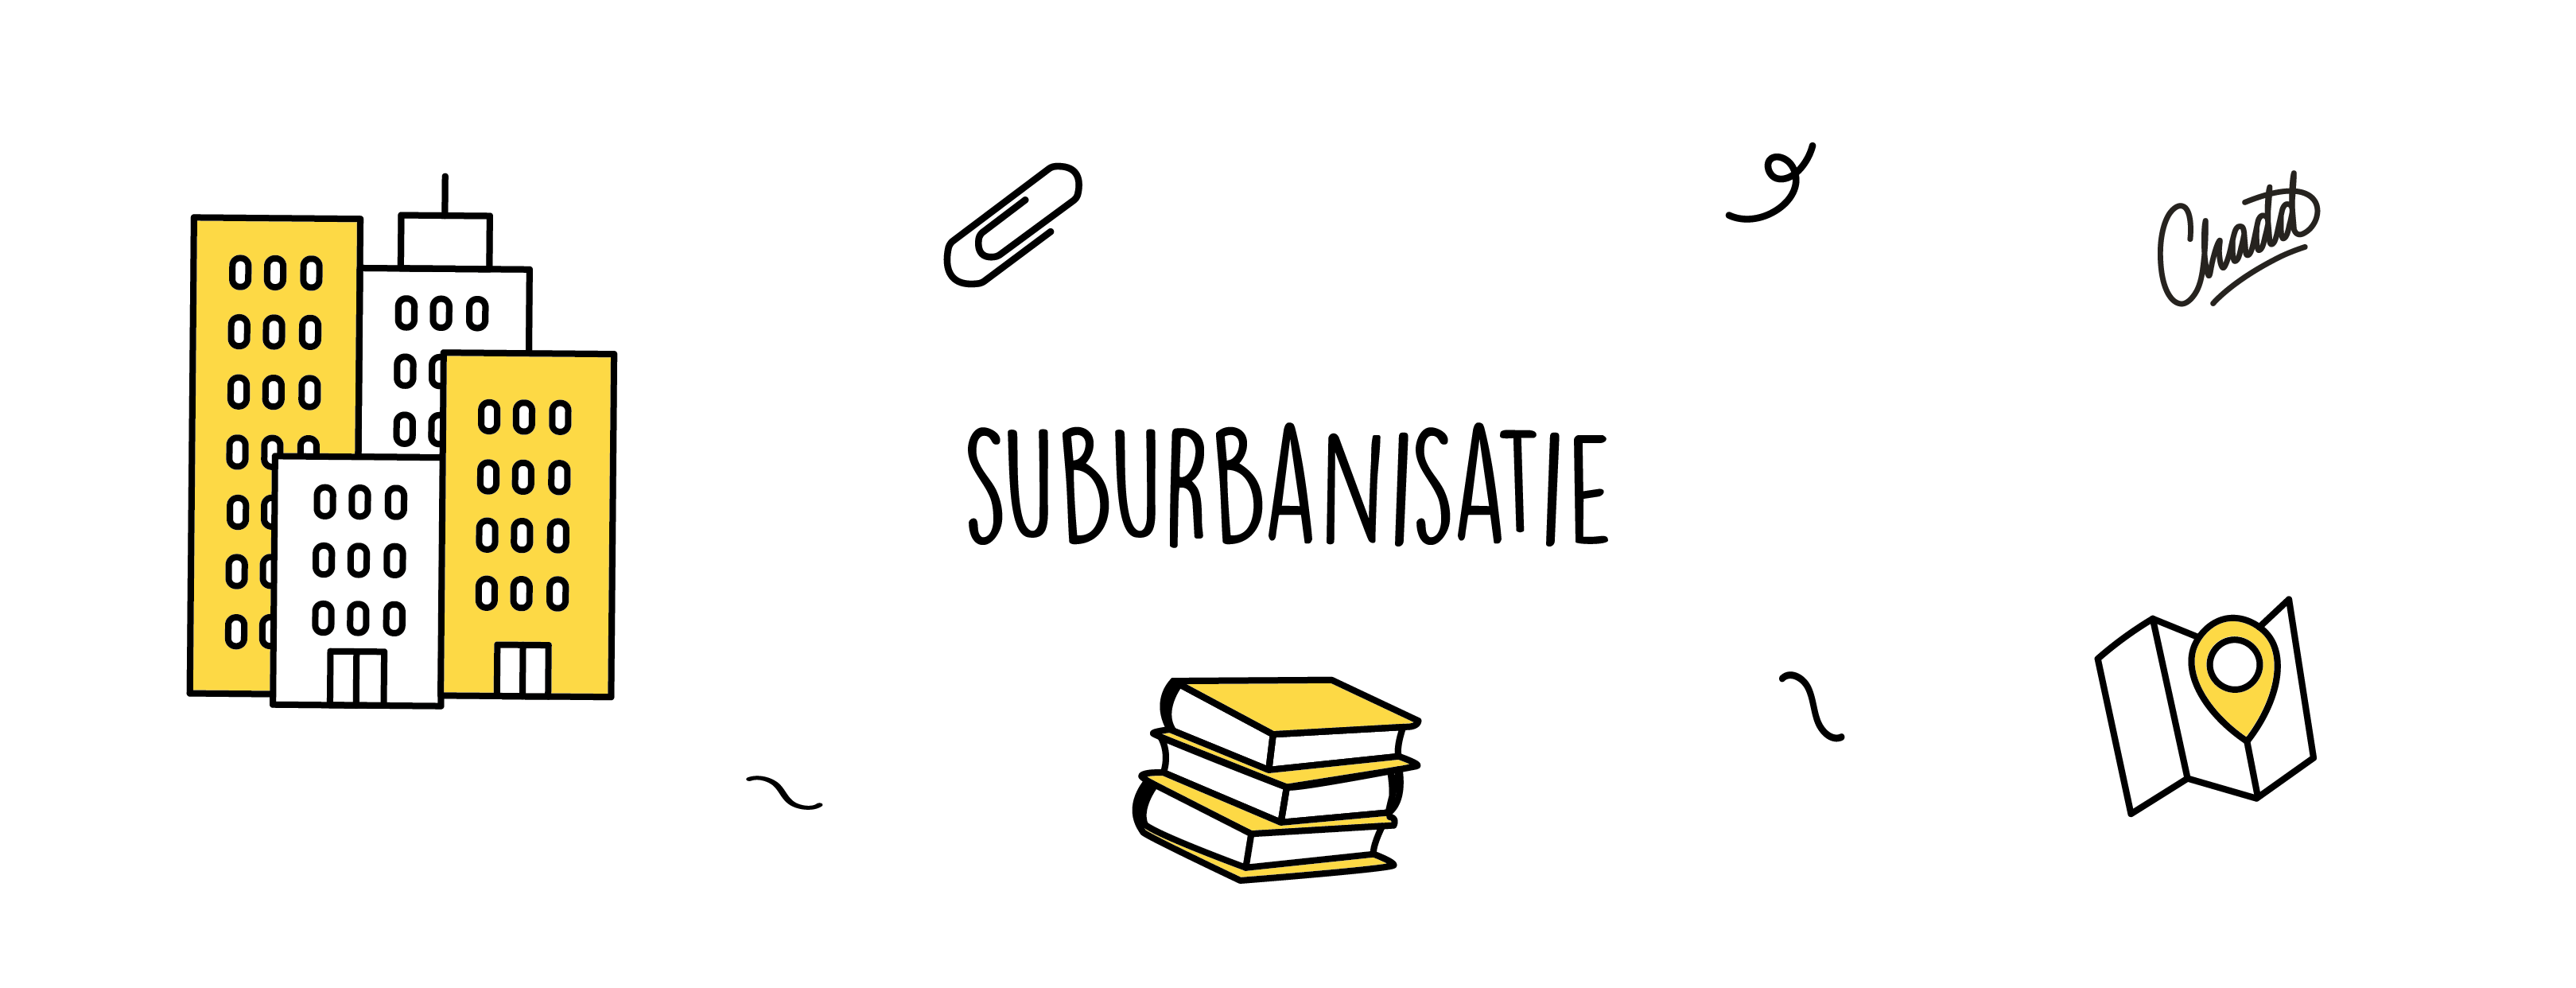 suburbanisatie